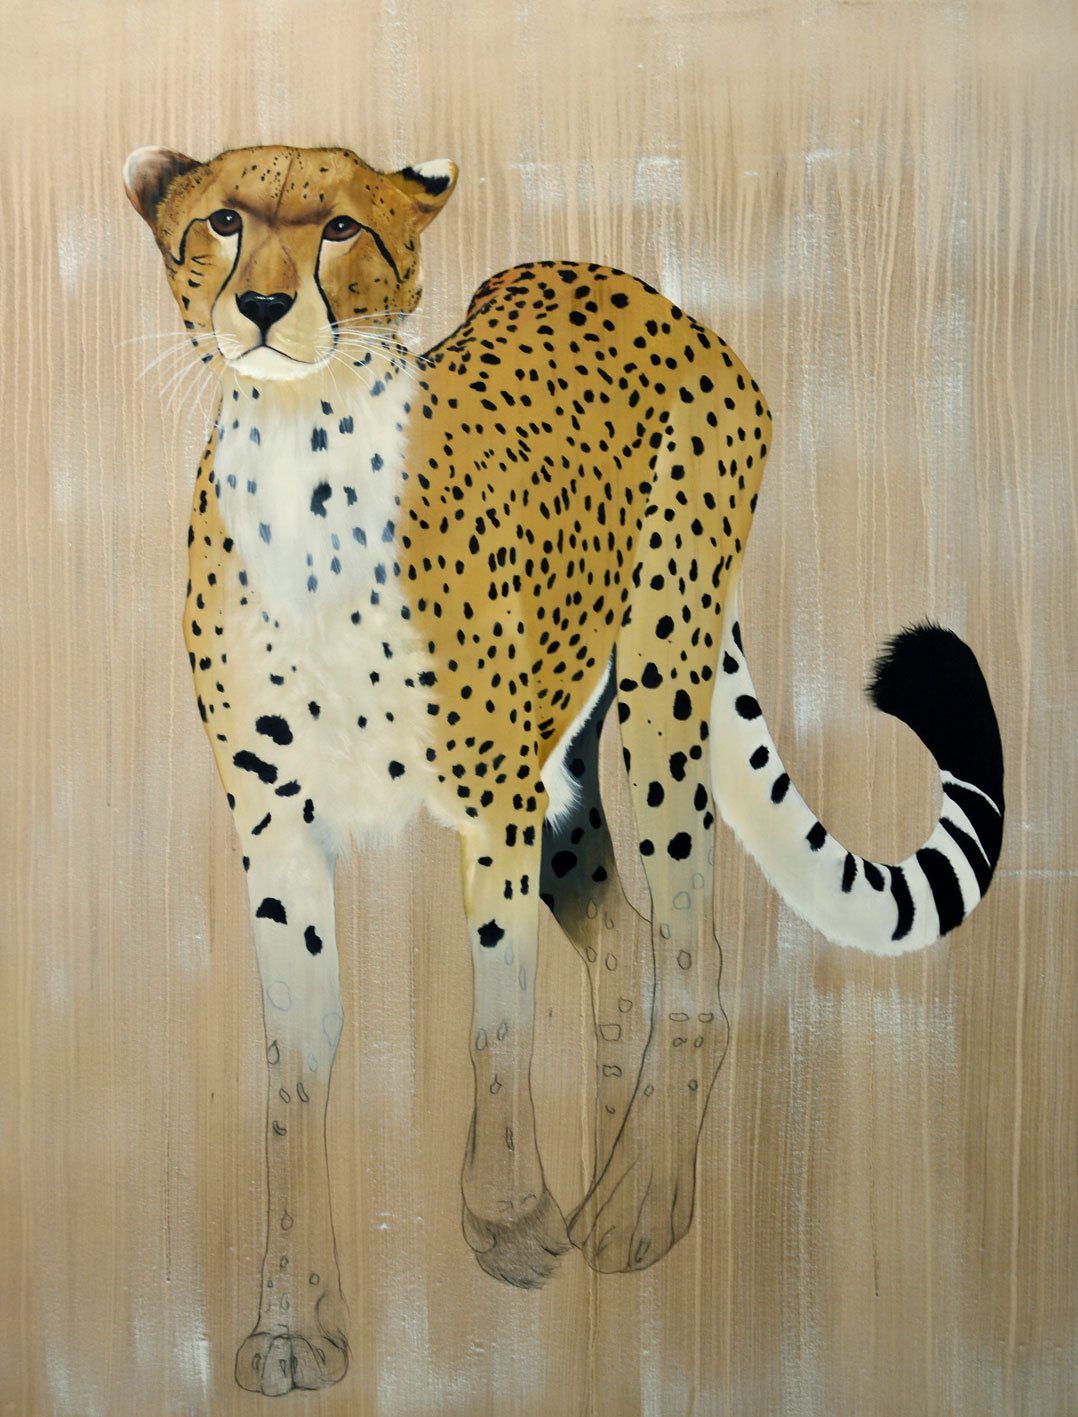 ACINONYX JUBATUS acinonyx-jubatus-cheetah-delete-threatened-endangered-extinction- Thierry Bisch Contemporary painter animals painting art decoration nature biodiversity conservation